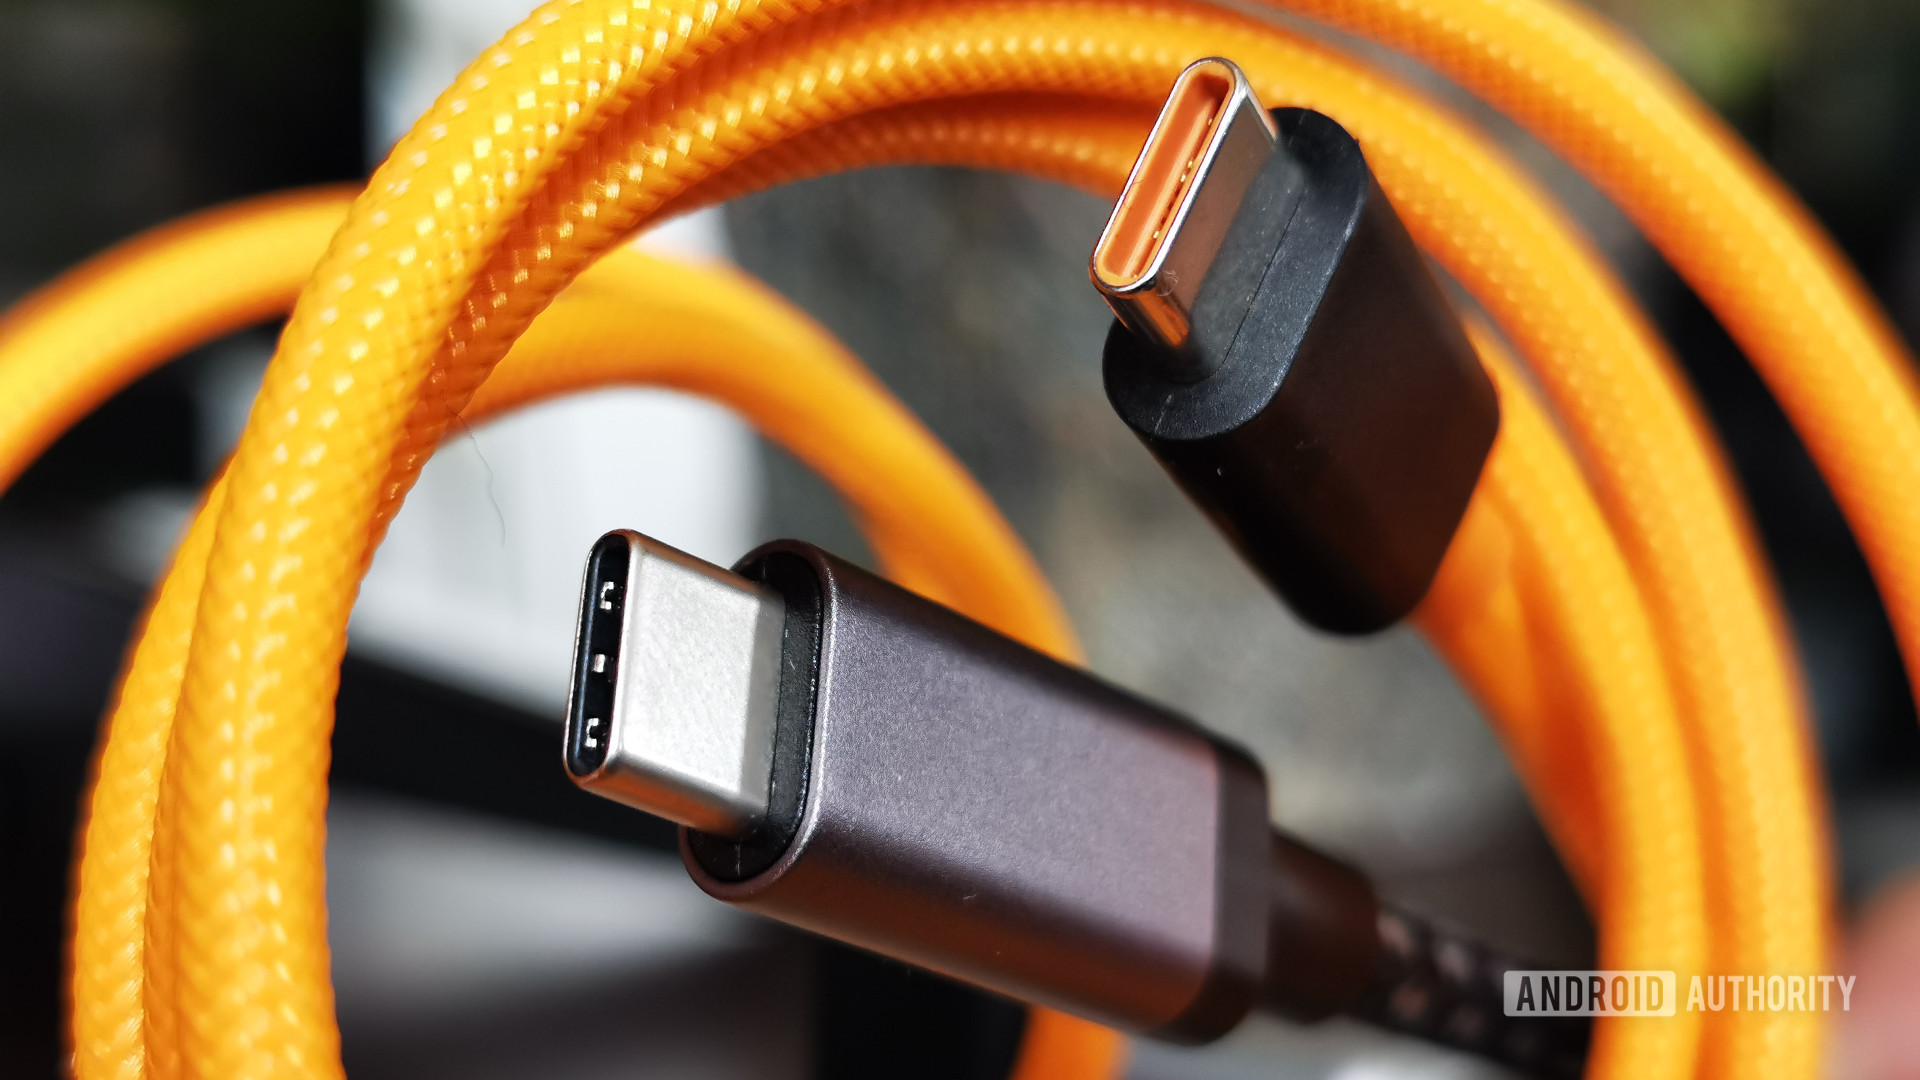 USB-C connector orange cable